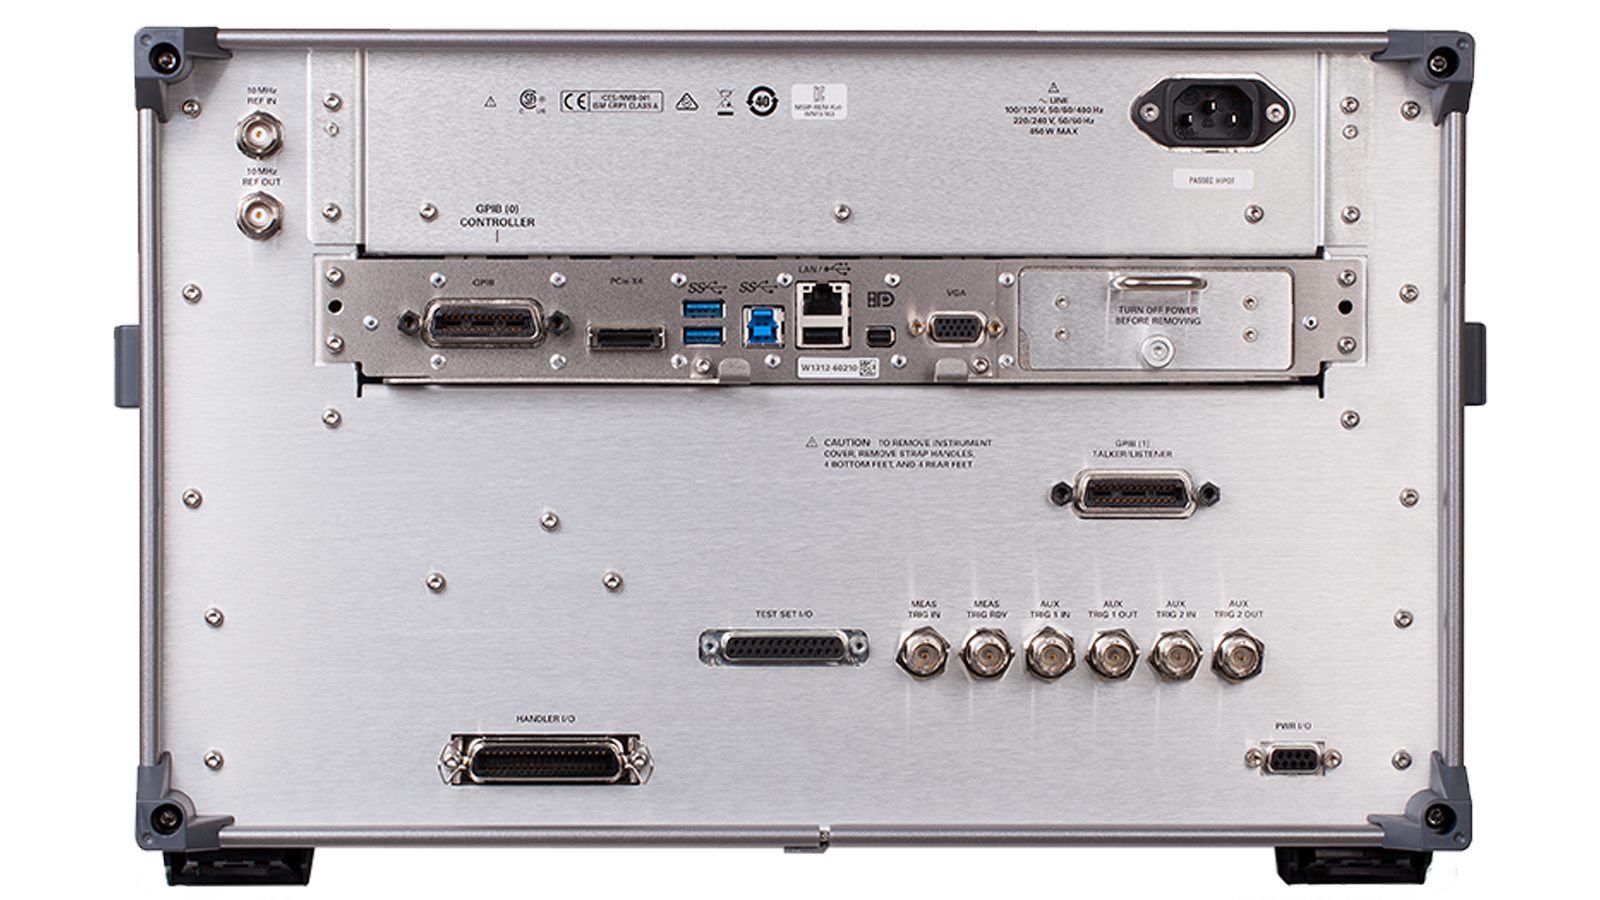 N5232B PNA-L network analyzer back plate view 